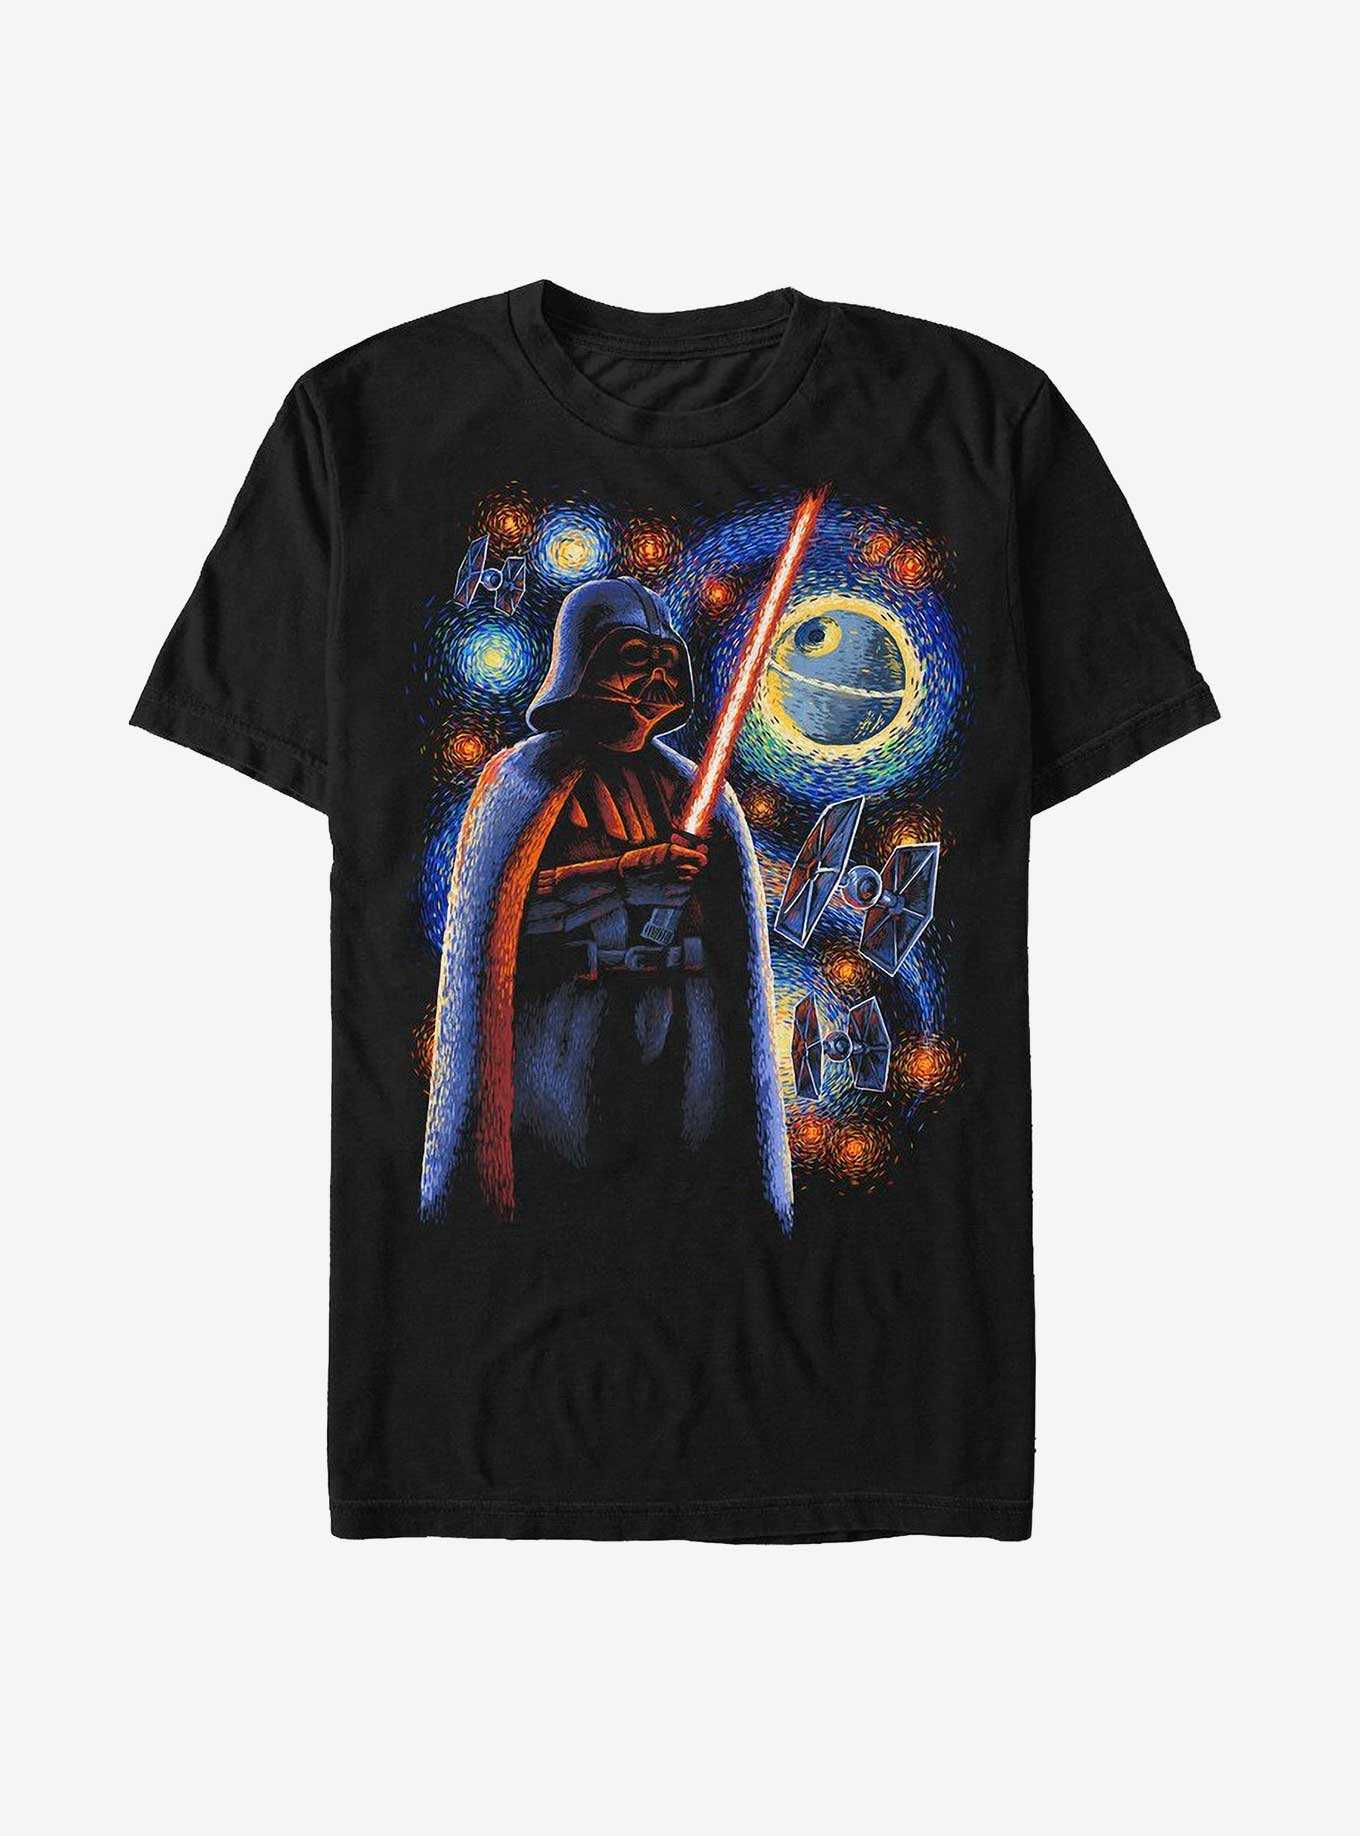 Star Wars Darth Vader Starry T-Shirt, , hi-res